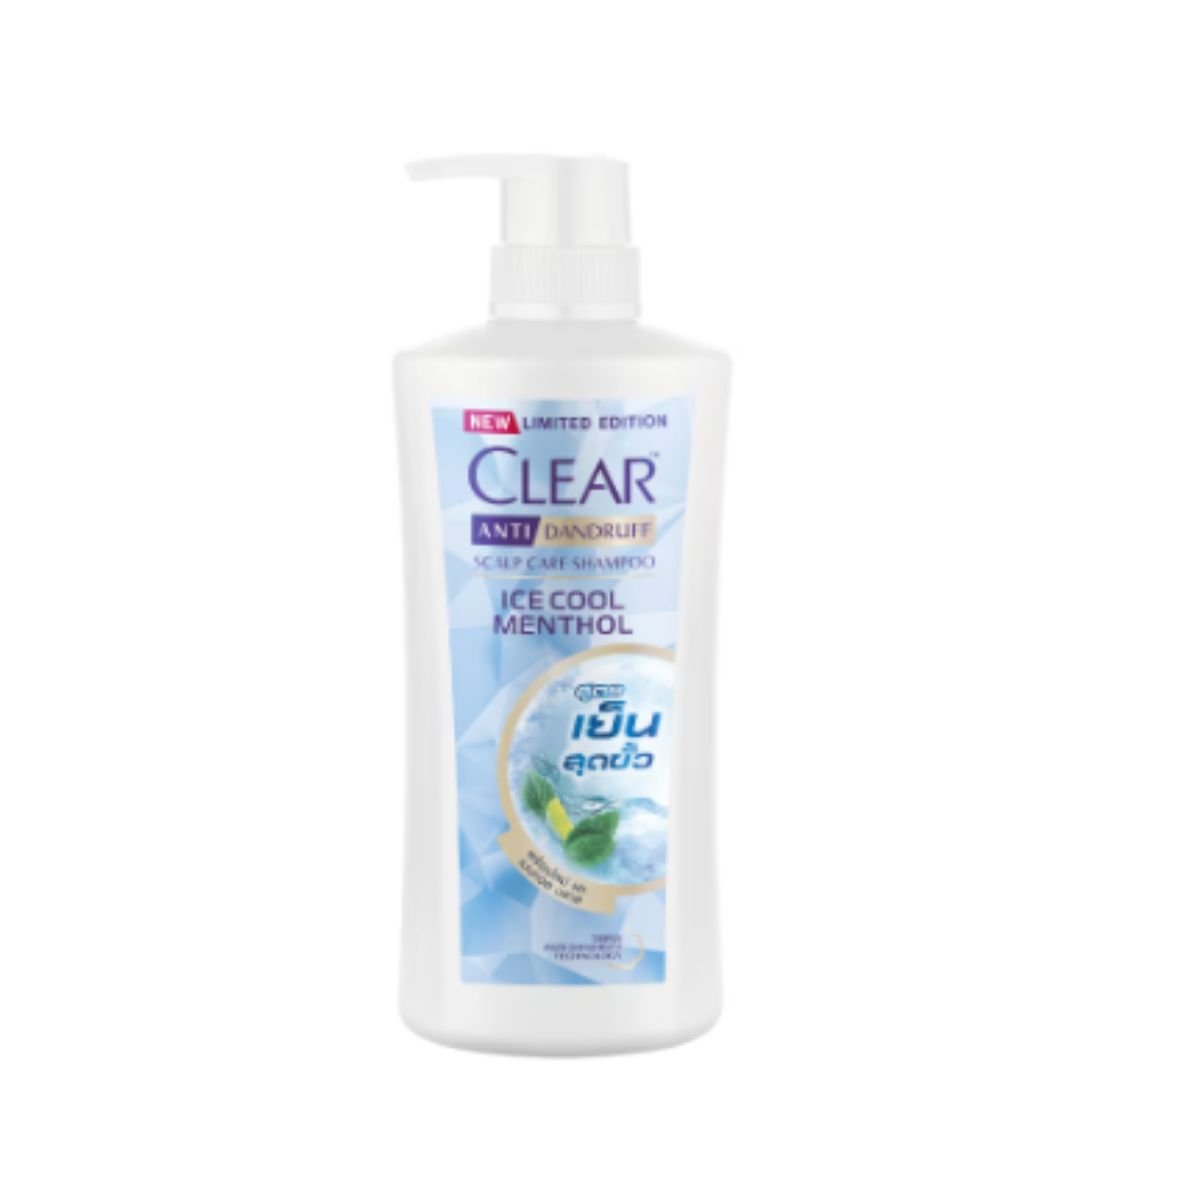 Clear Anti Dandruff Scalp Care Shampoo - Ice Cool Menthol - 400ml